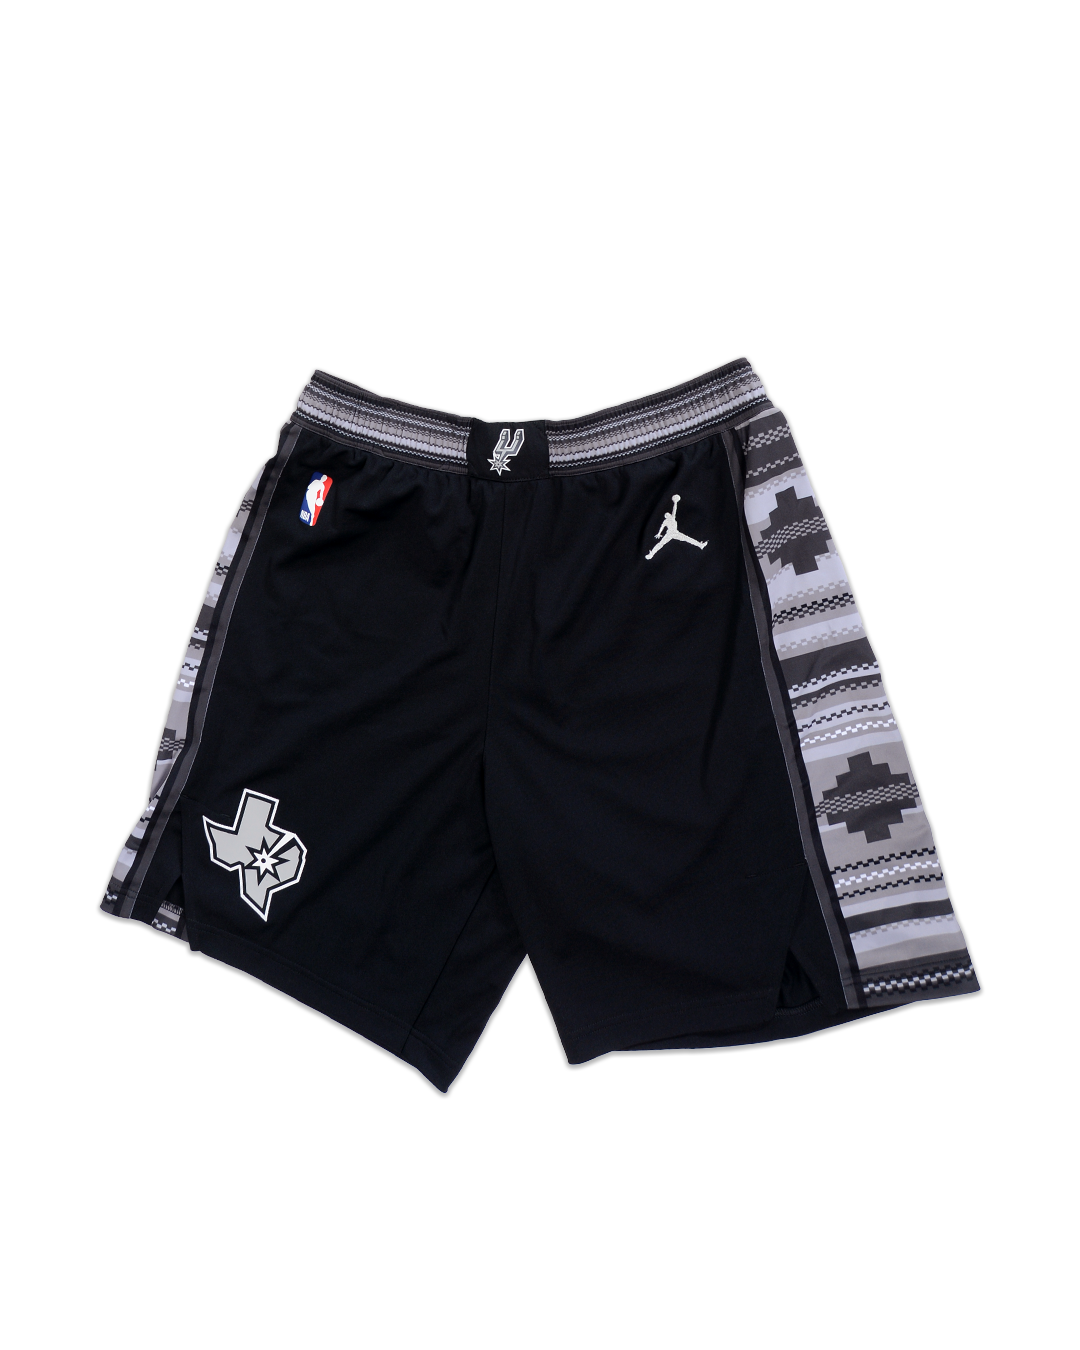 LautaDesign on X: @spurs X @nikebasketball City Edition Jersey Concept   #Spurs #GoSpursGo  / X